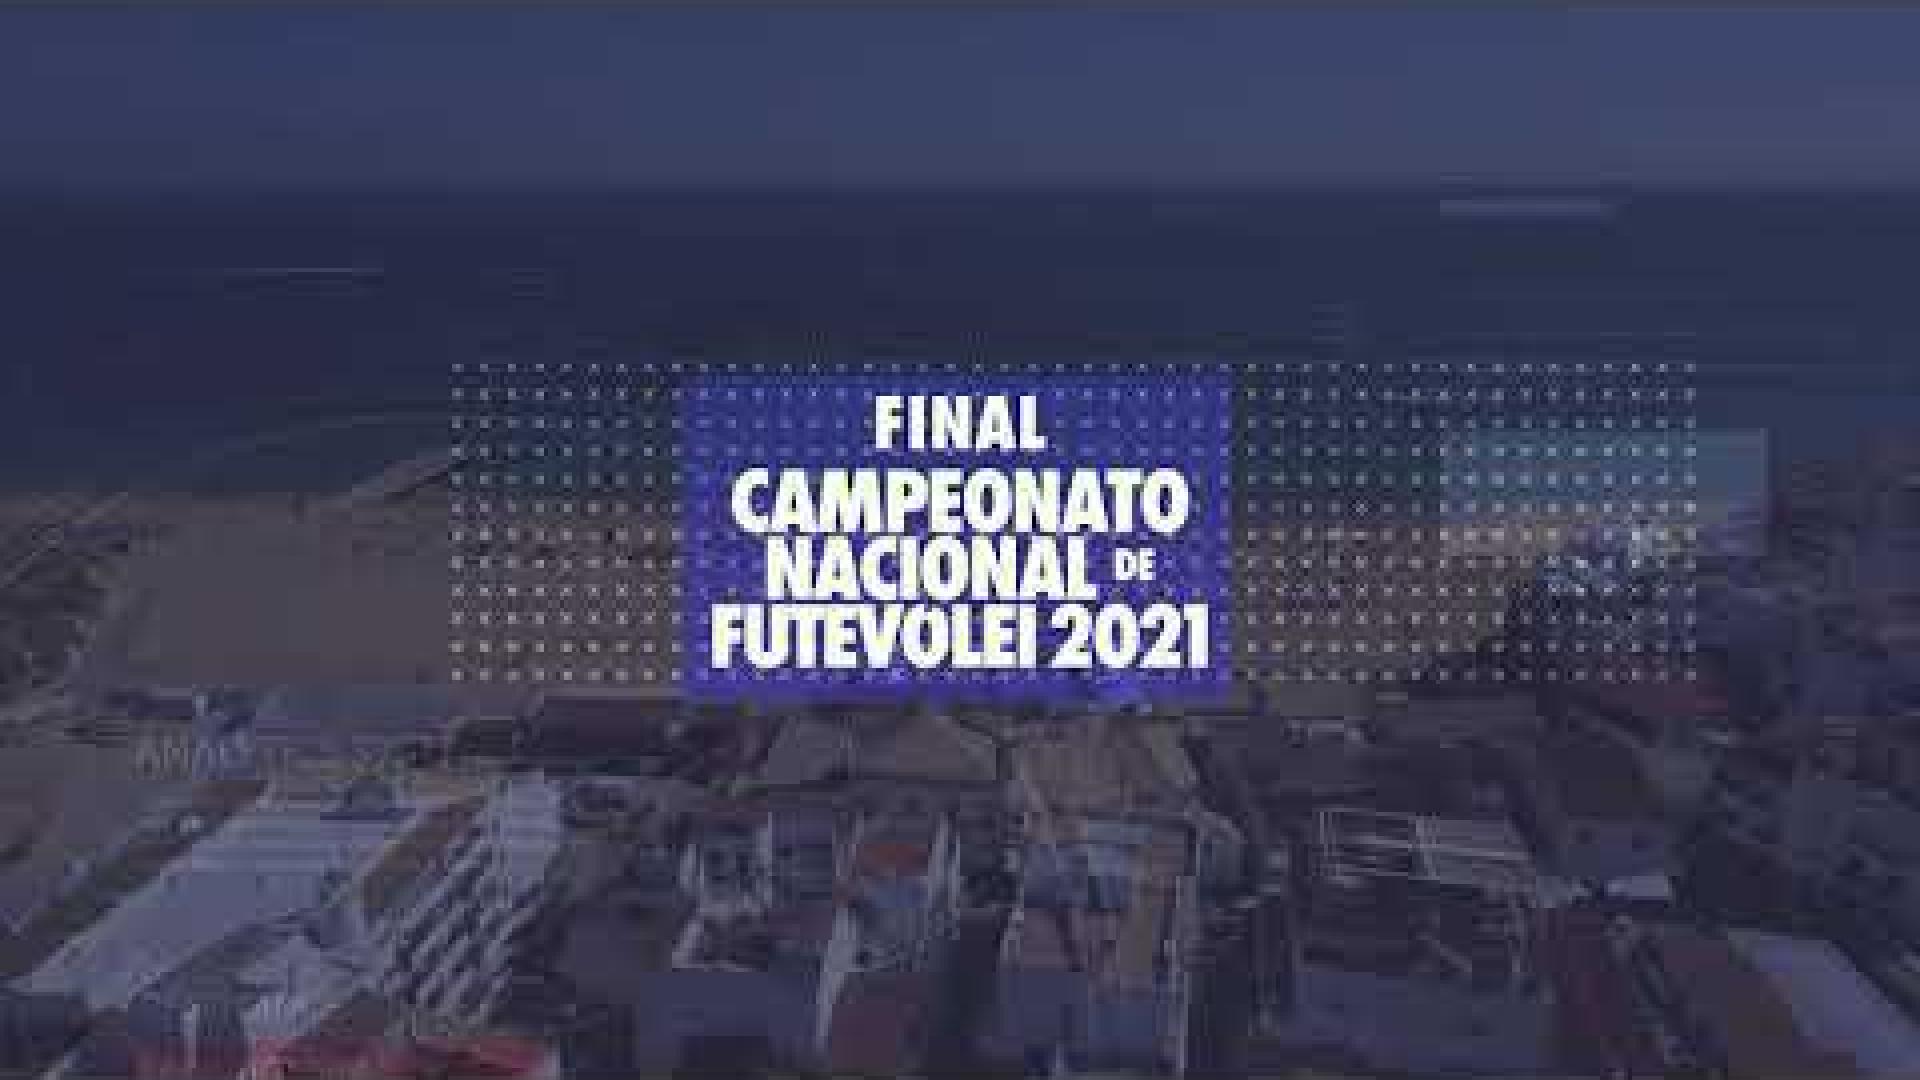 Preview image for the video "Teaser - Final do Campeonato Nacional de Futevólei 2021".